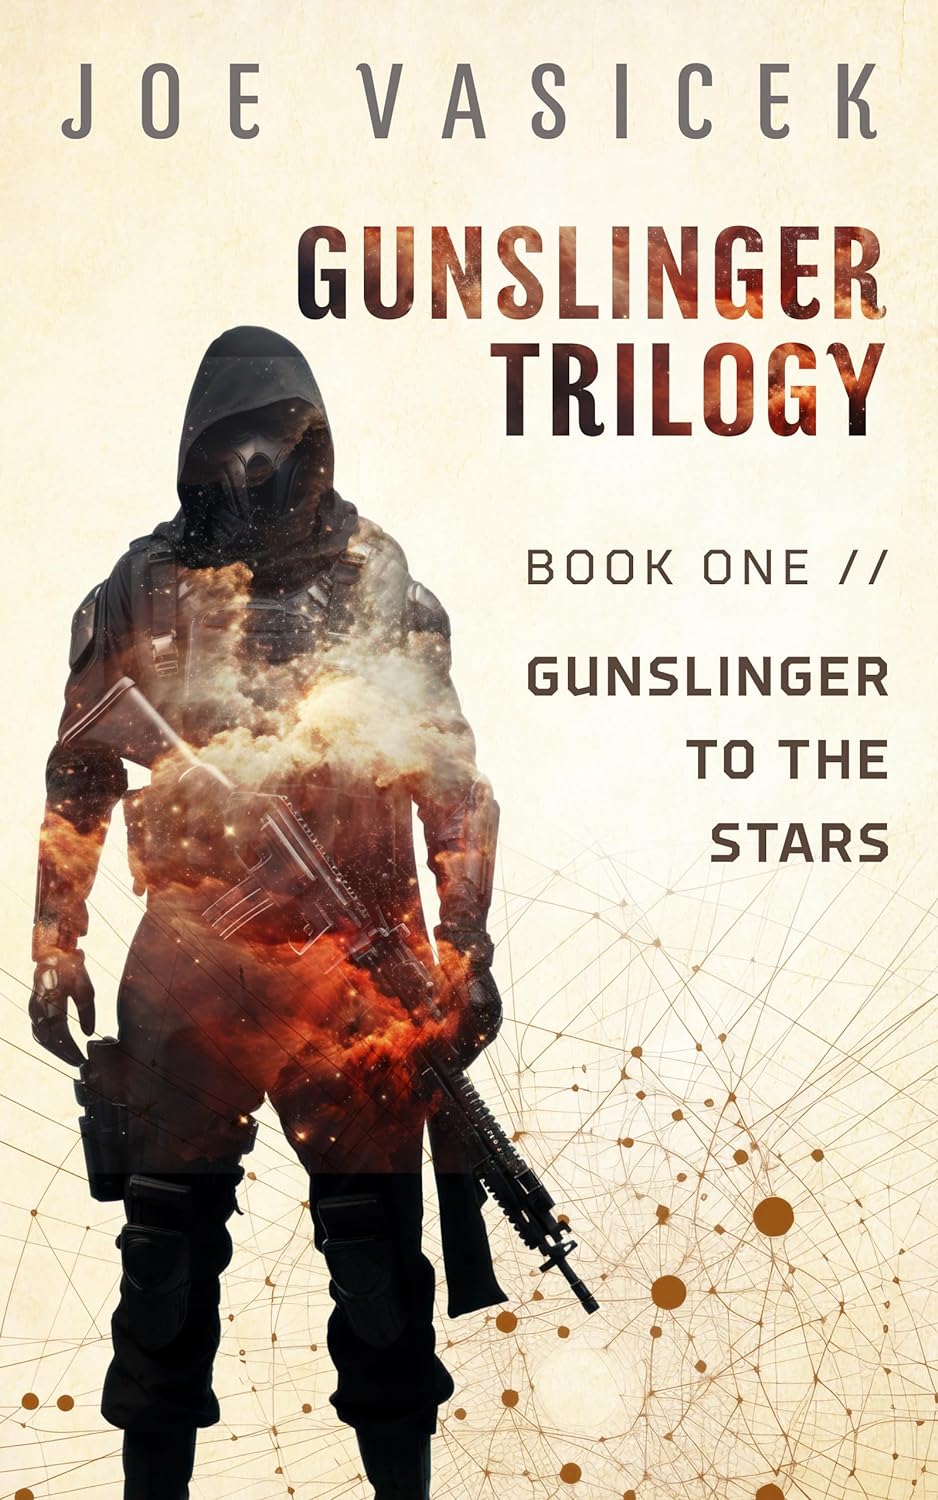 Gunslinger to the Stars - Gunslinger Trilogy Book 1 is free on Amazon Kindle